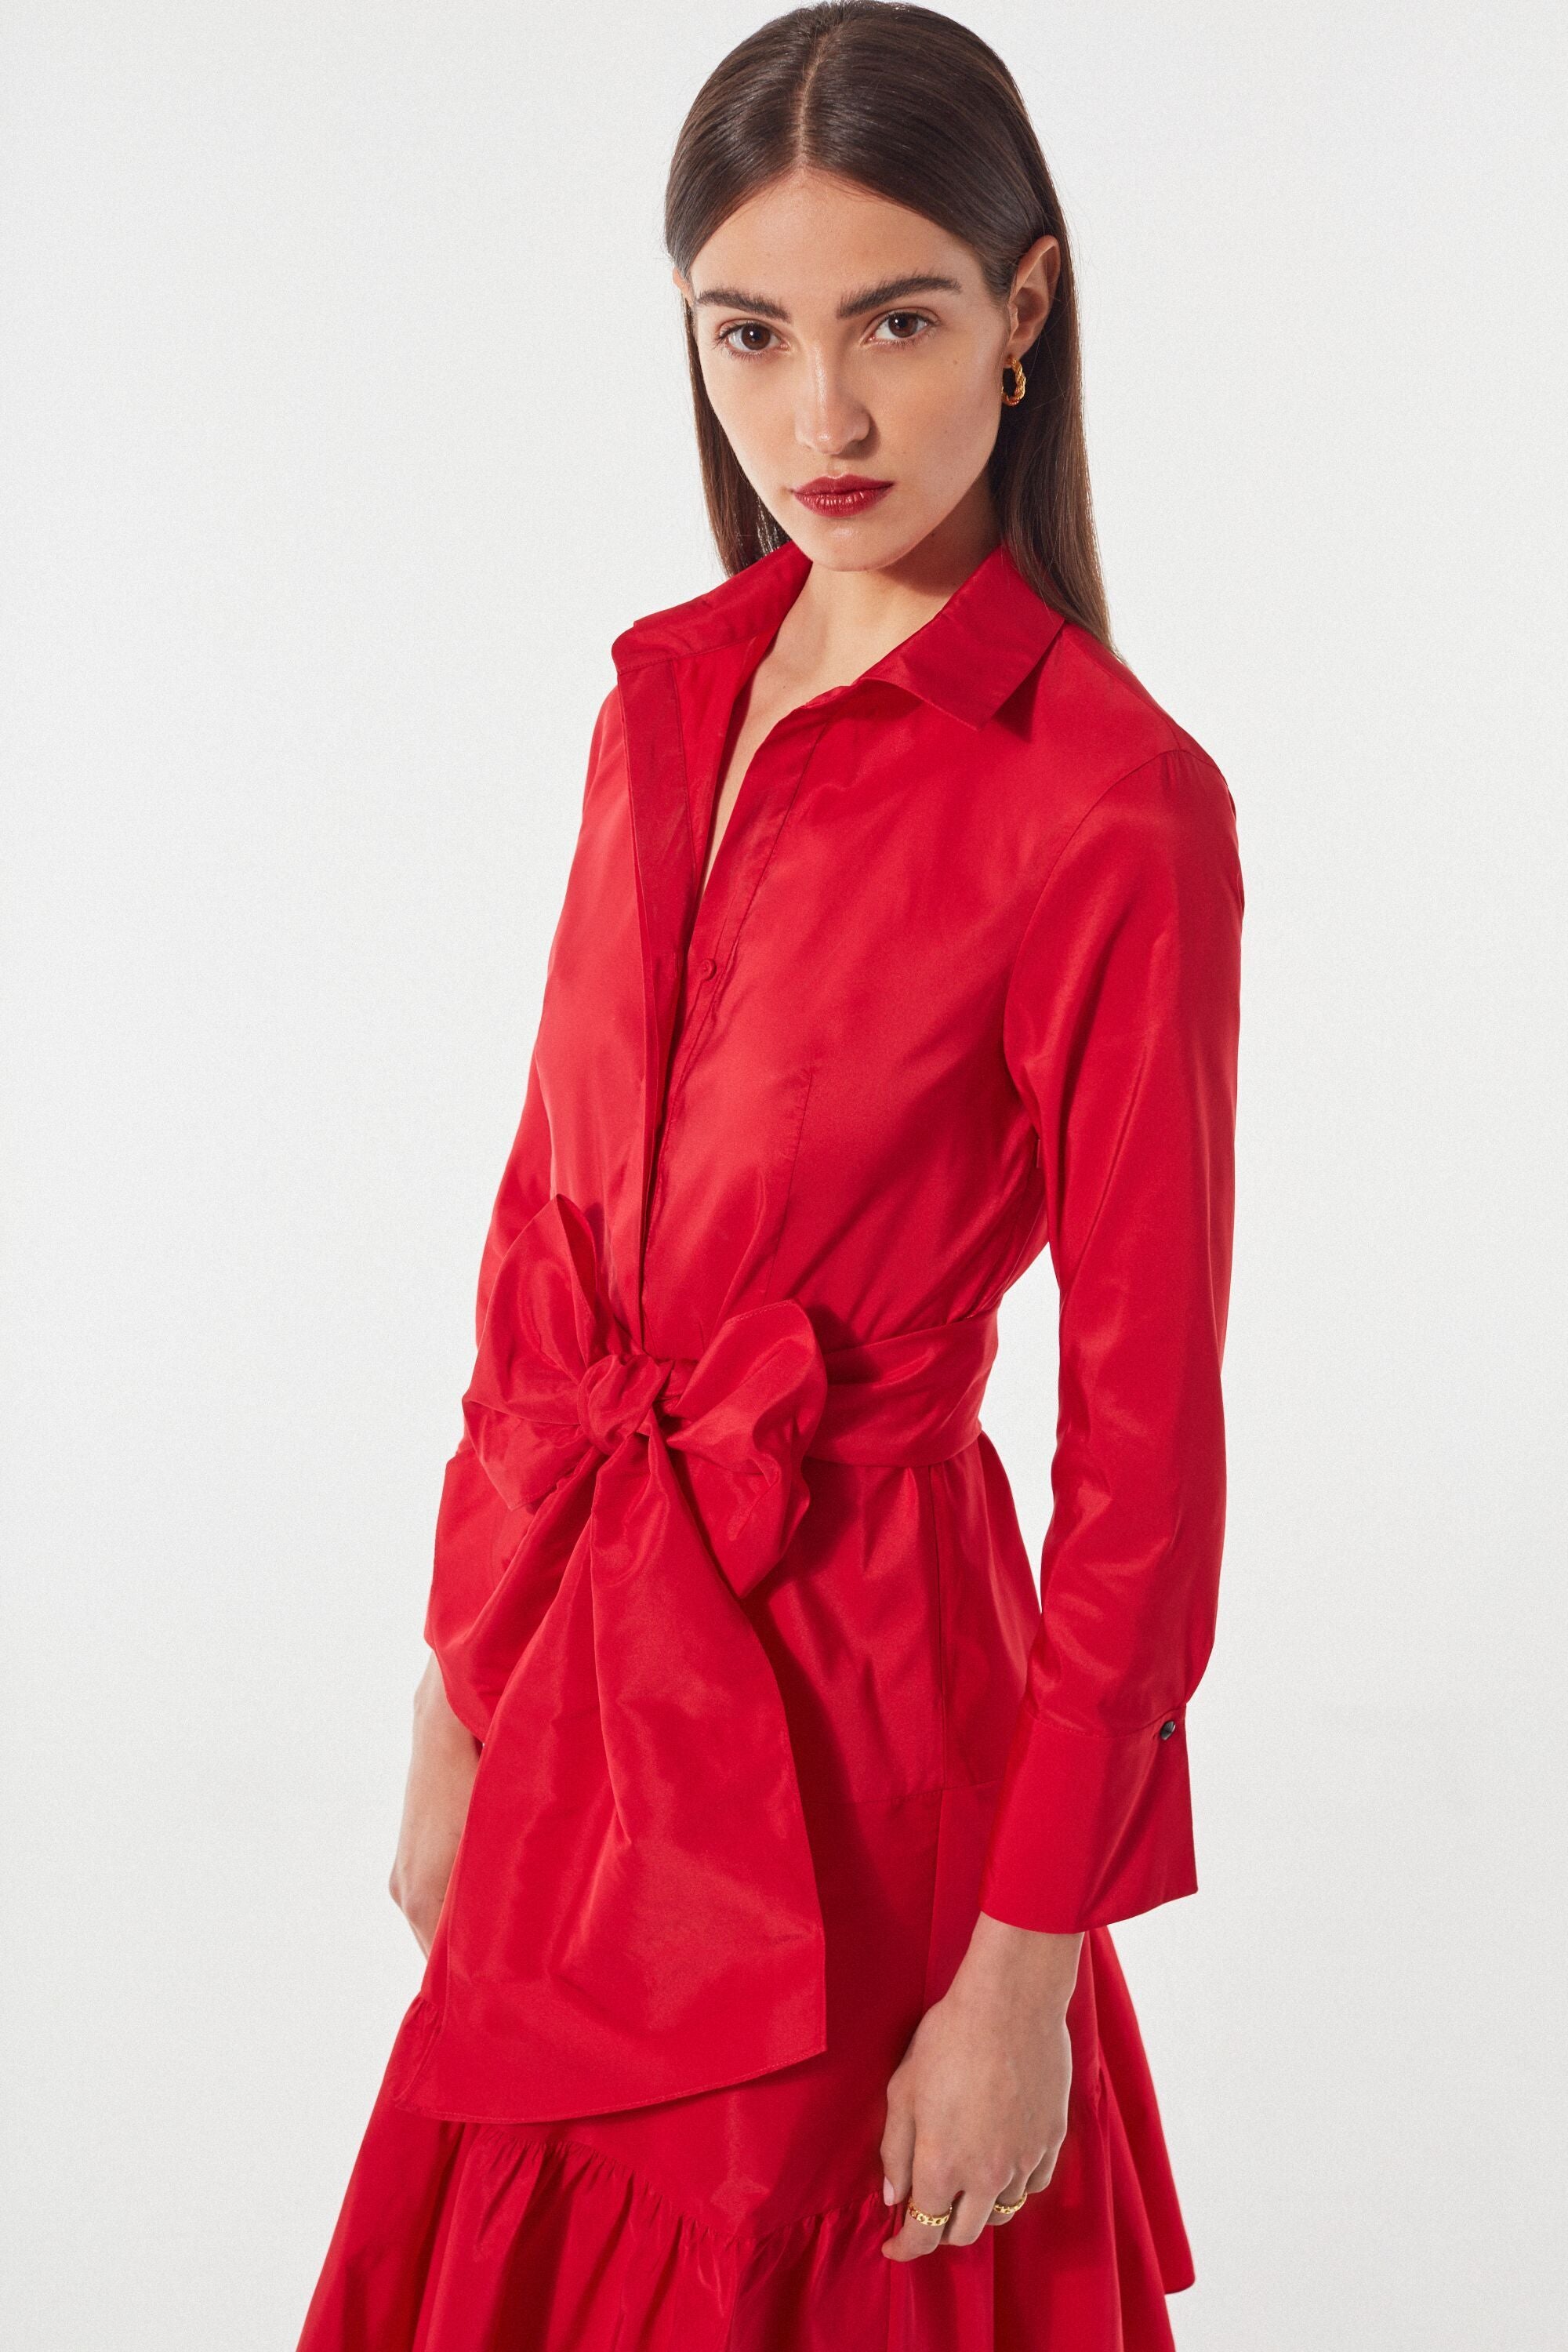 Taffeta dress red - Carolina United States